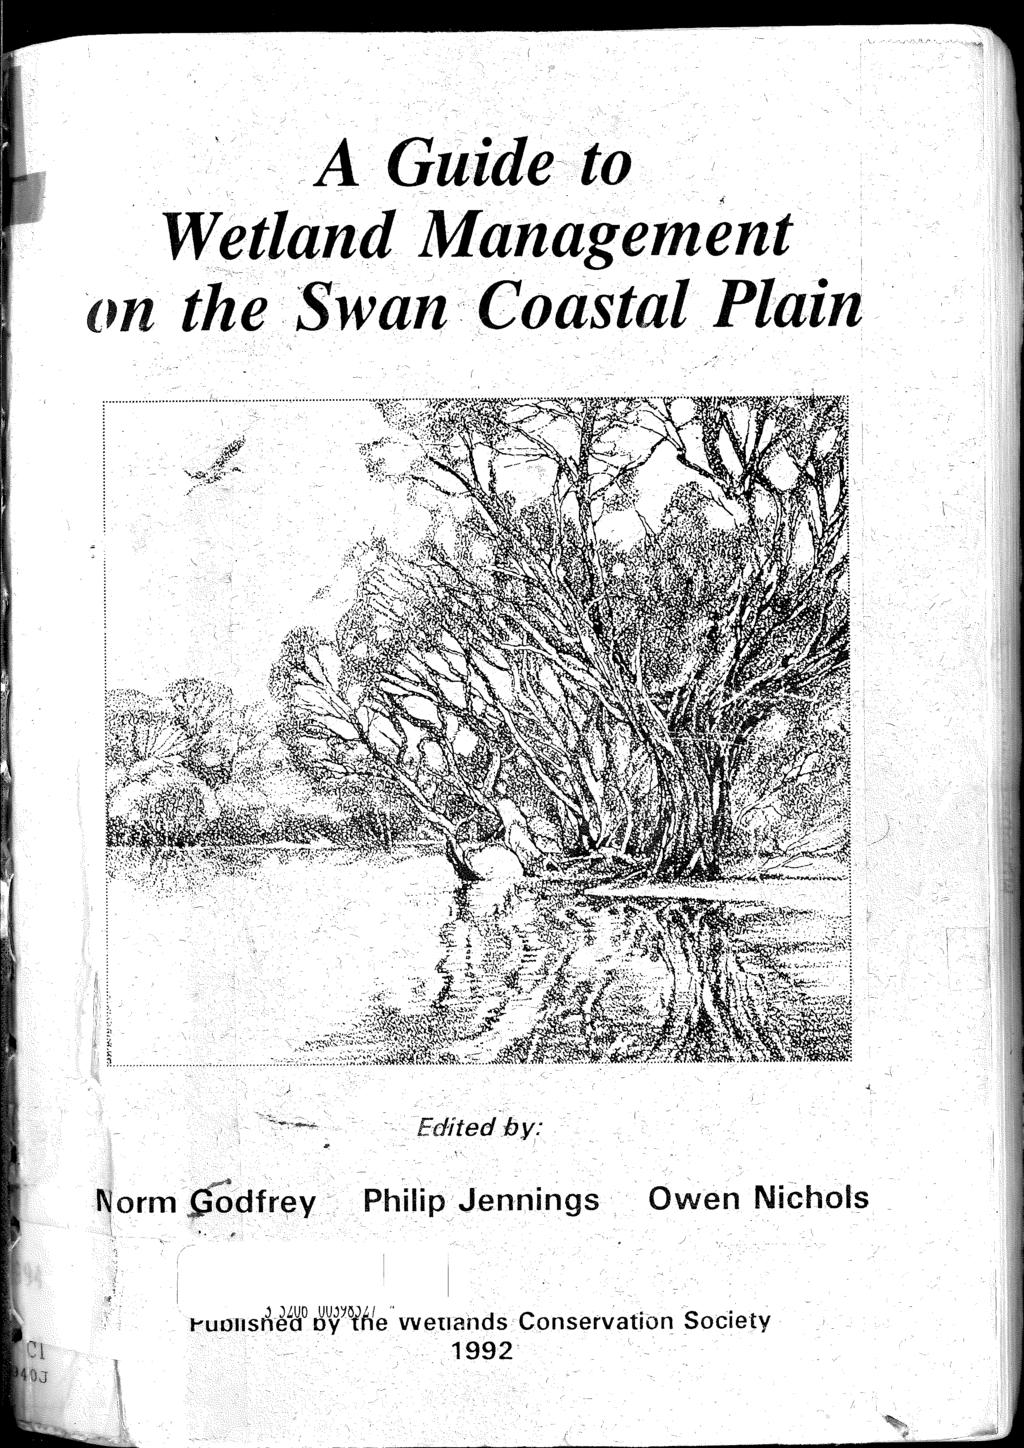 ,. A Guide~ to. \ '," -=-- - Wetland Management "'. on the.. SWan. CoaStal.. Plain..r i',-.,,,,,,..,,,,,,,,,,,,,~,,,,,,,,,,,,,,,,,,,,,,,~y.c'.;:\-'.~;,,,,,,,~\~o;.~'l-'.~1 -,l, ~ -AtJ.~ -A. -...~~~:~ ~\.